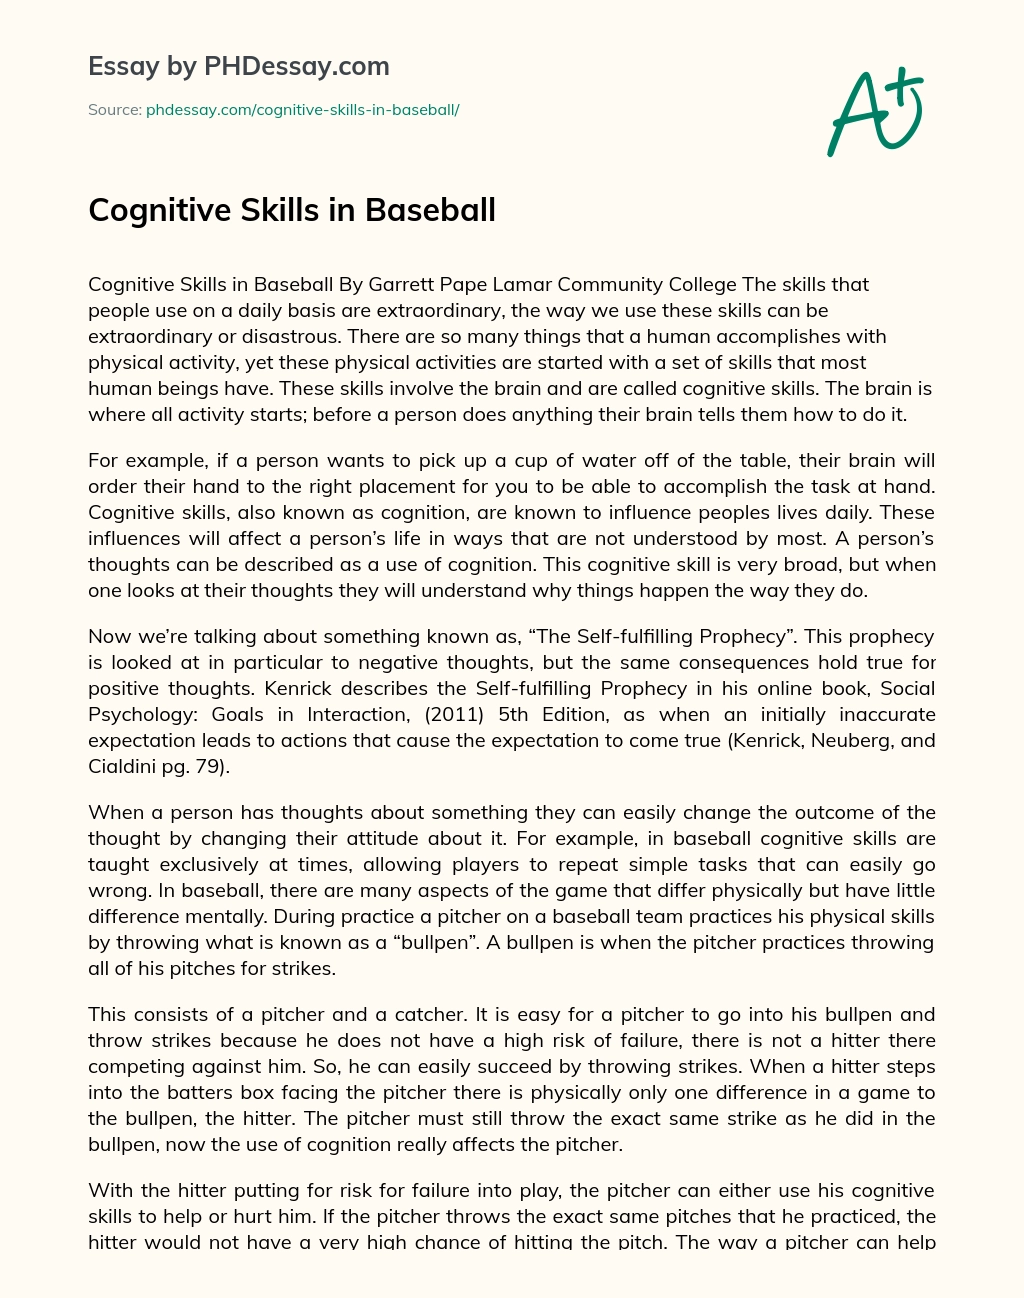 Cognitive Skills in Baseball essay